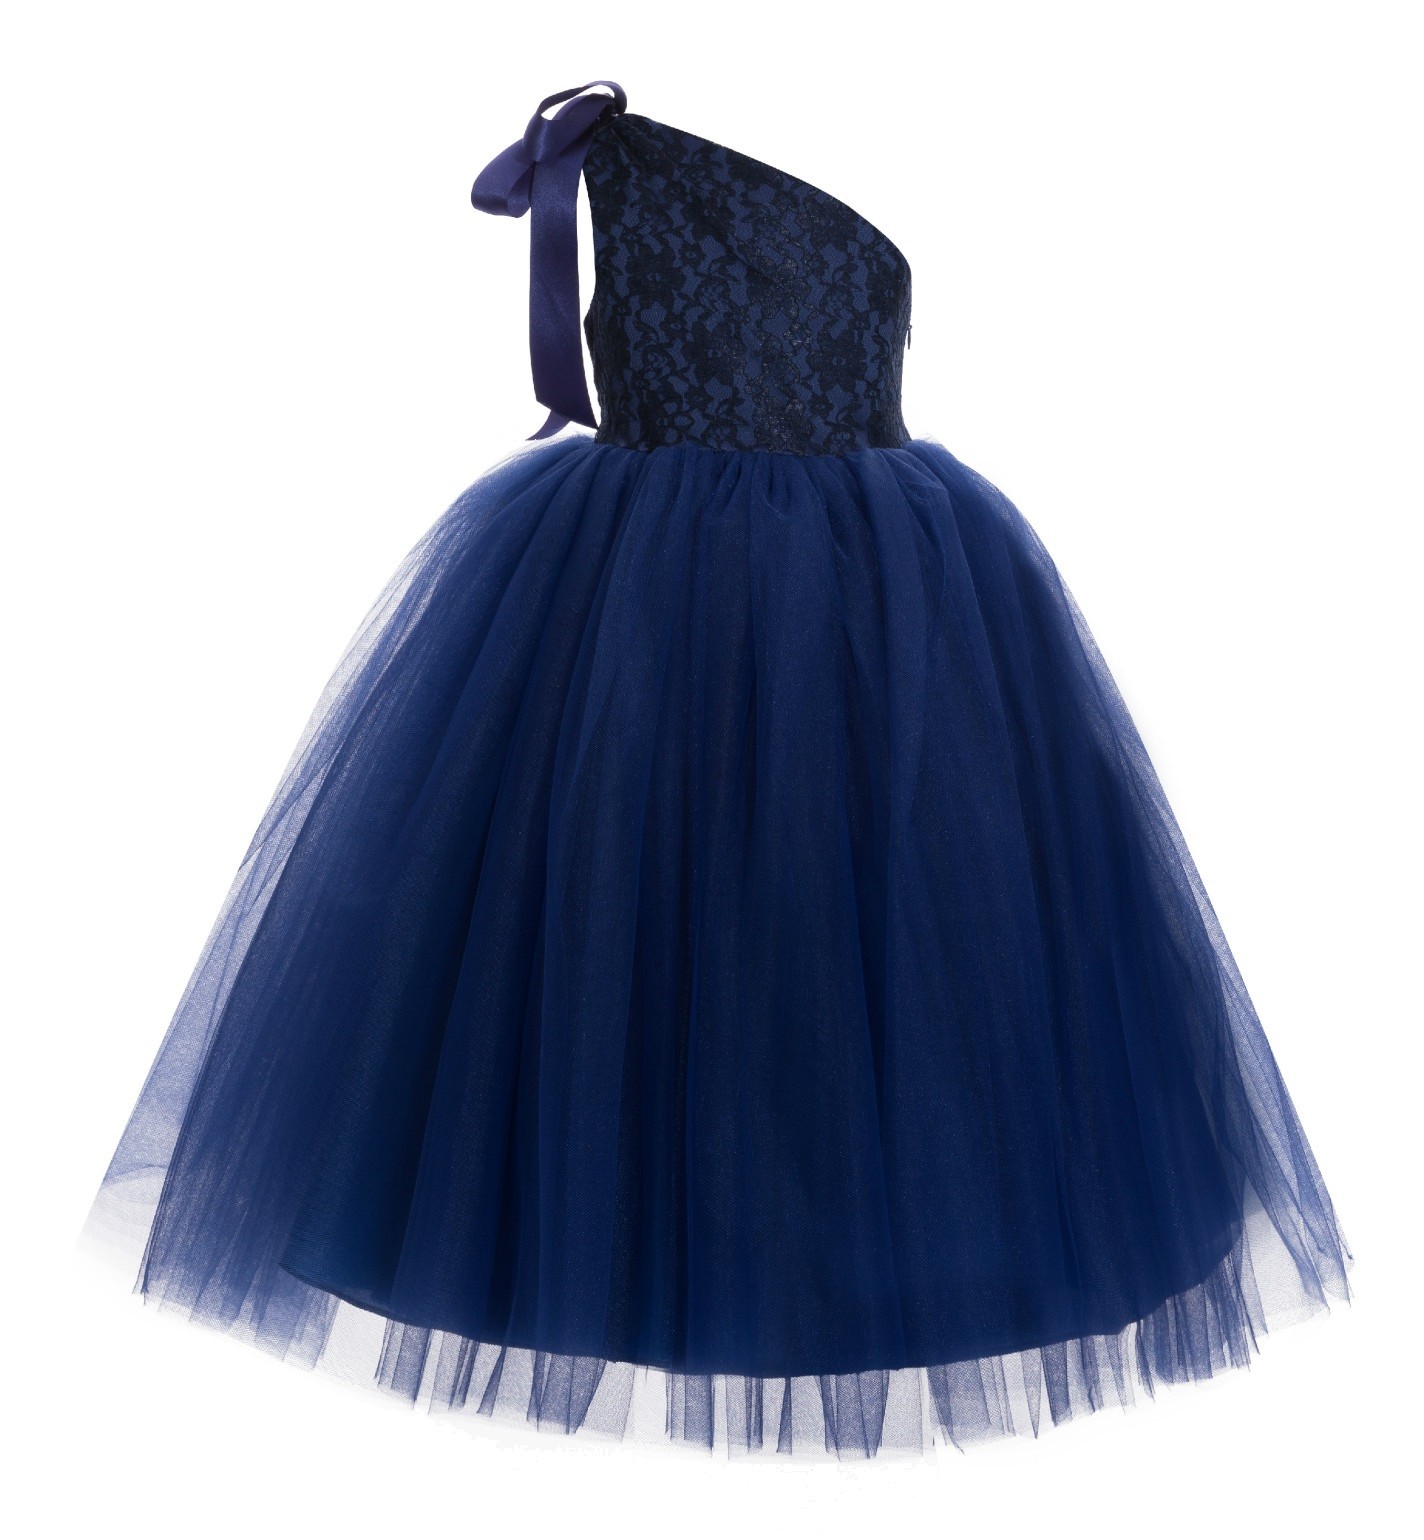 Navy Blue One-Shoulder Lace Tutu Flower Girl Dress 182Lace